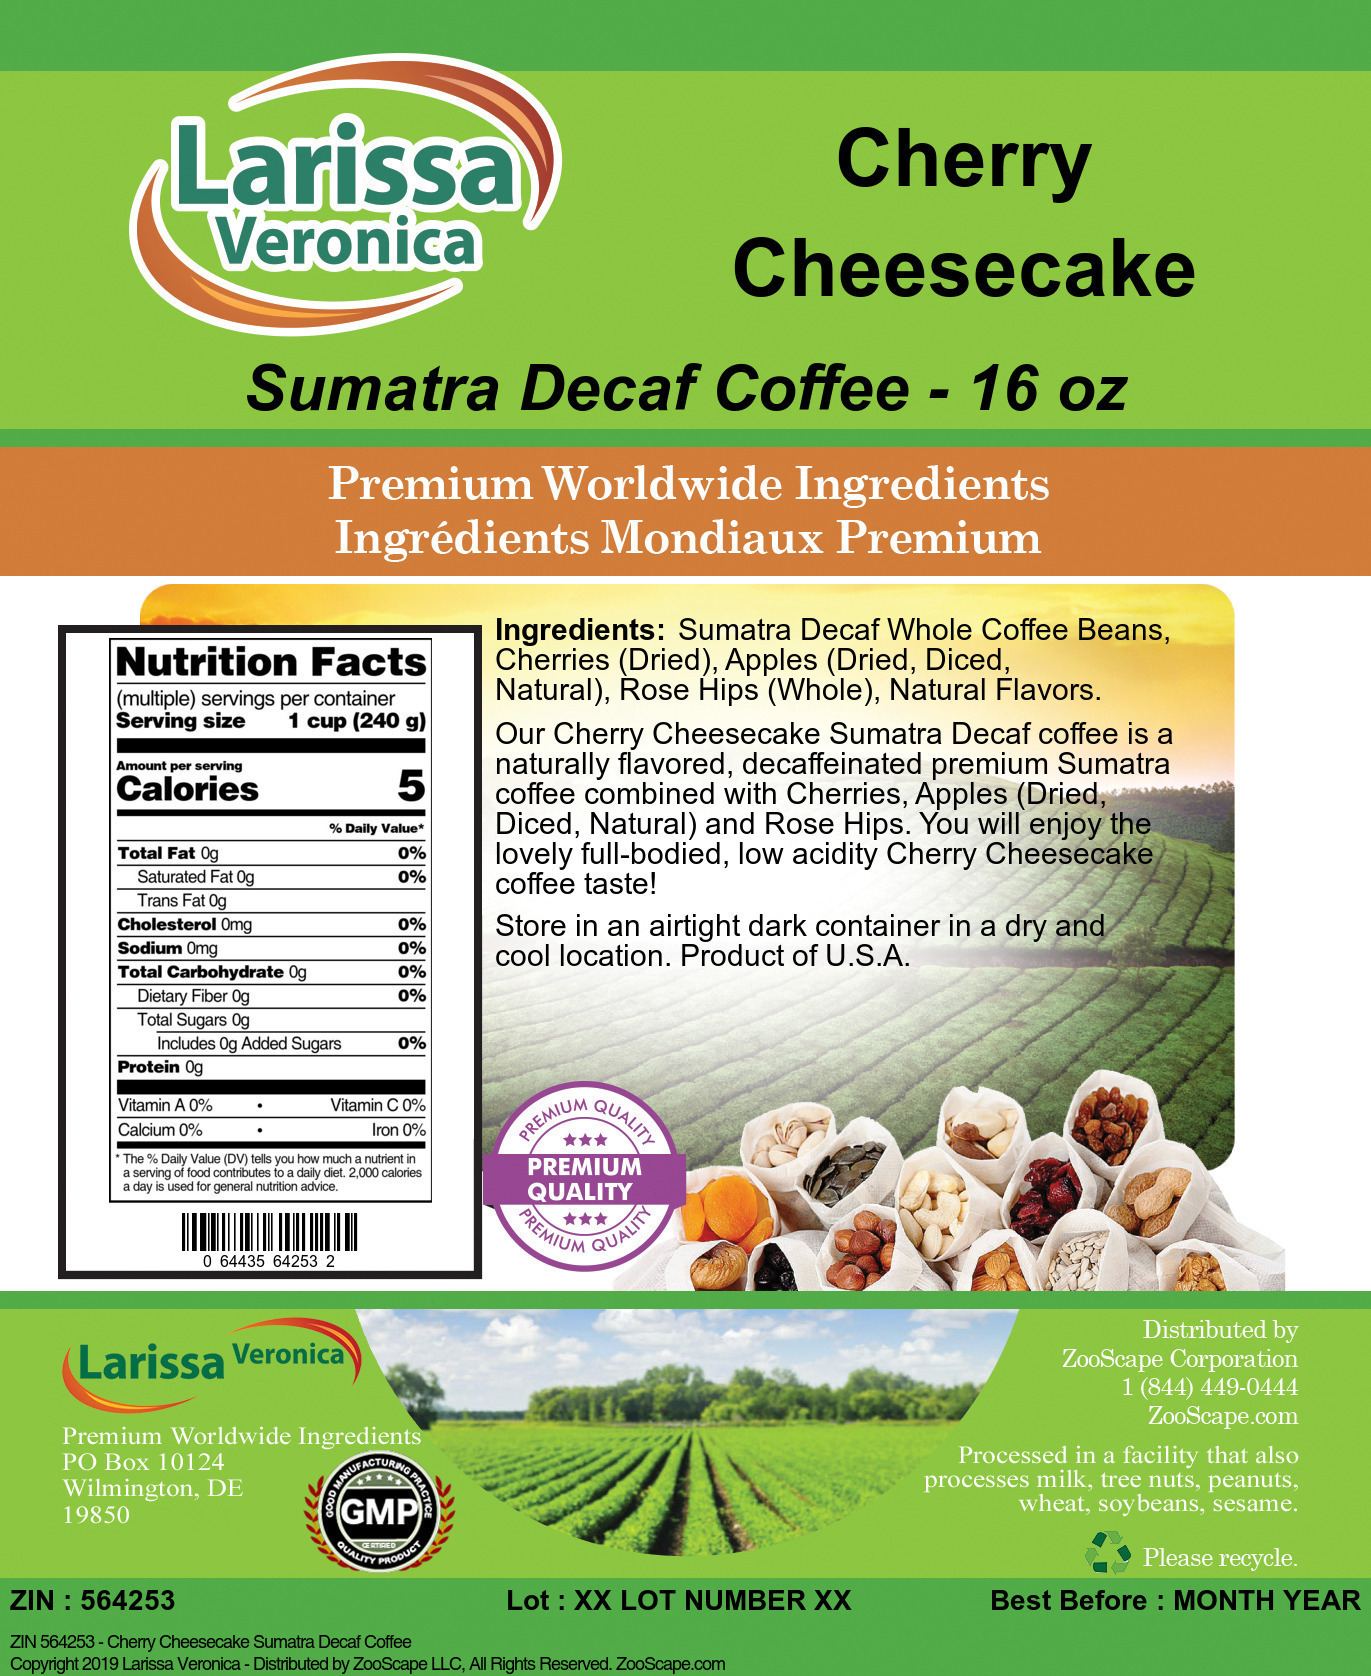 Cherry Cheesecake Sumatra Decaf Coffee - Label